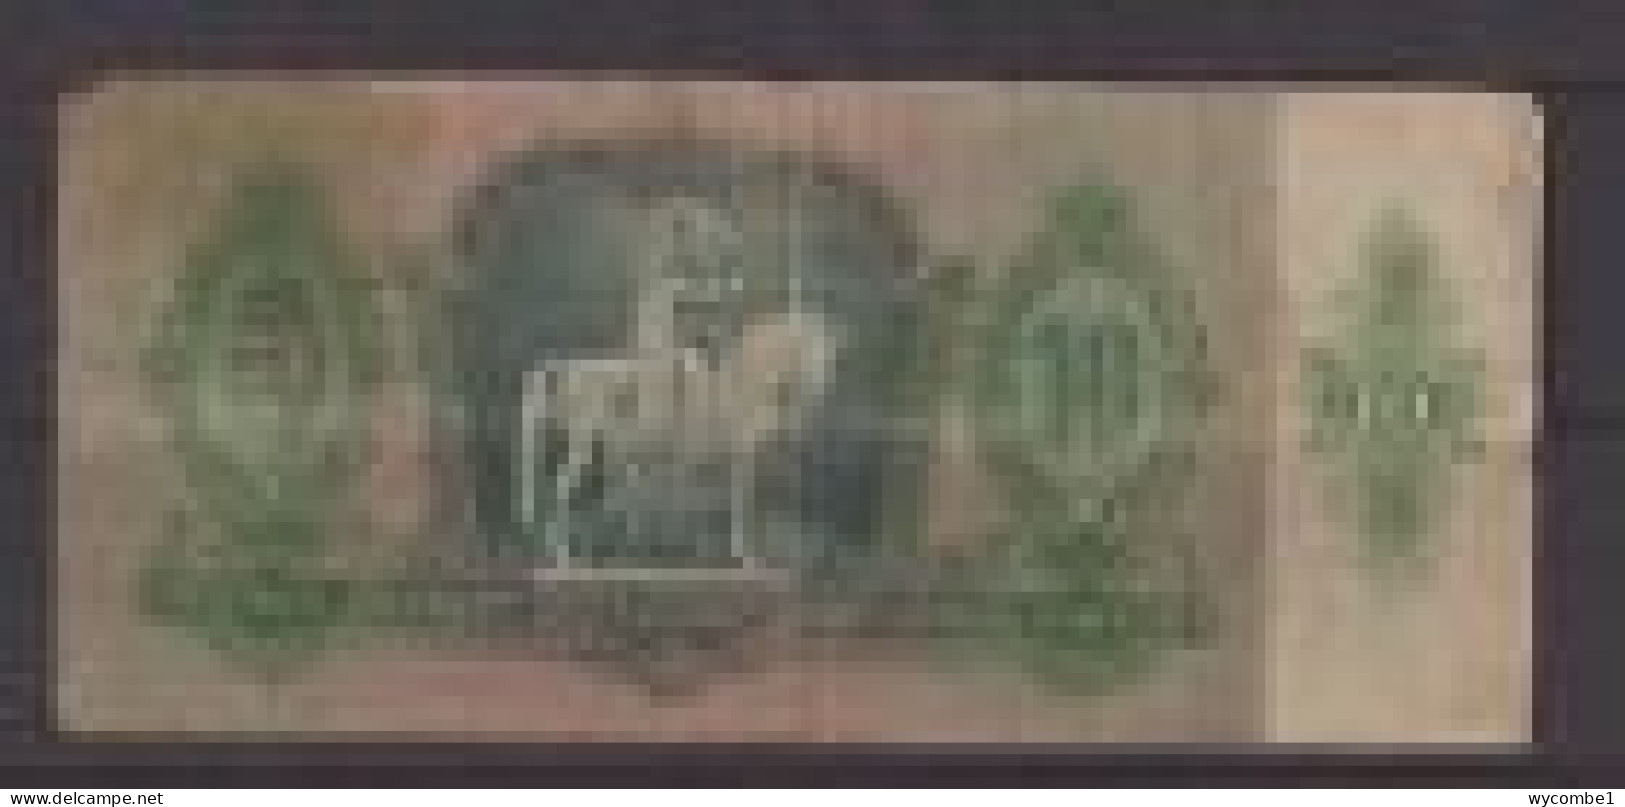 HUNGARY - 1936 10 Pengo Circulated Banknote - Hongrie